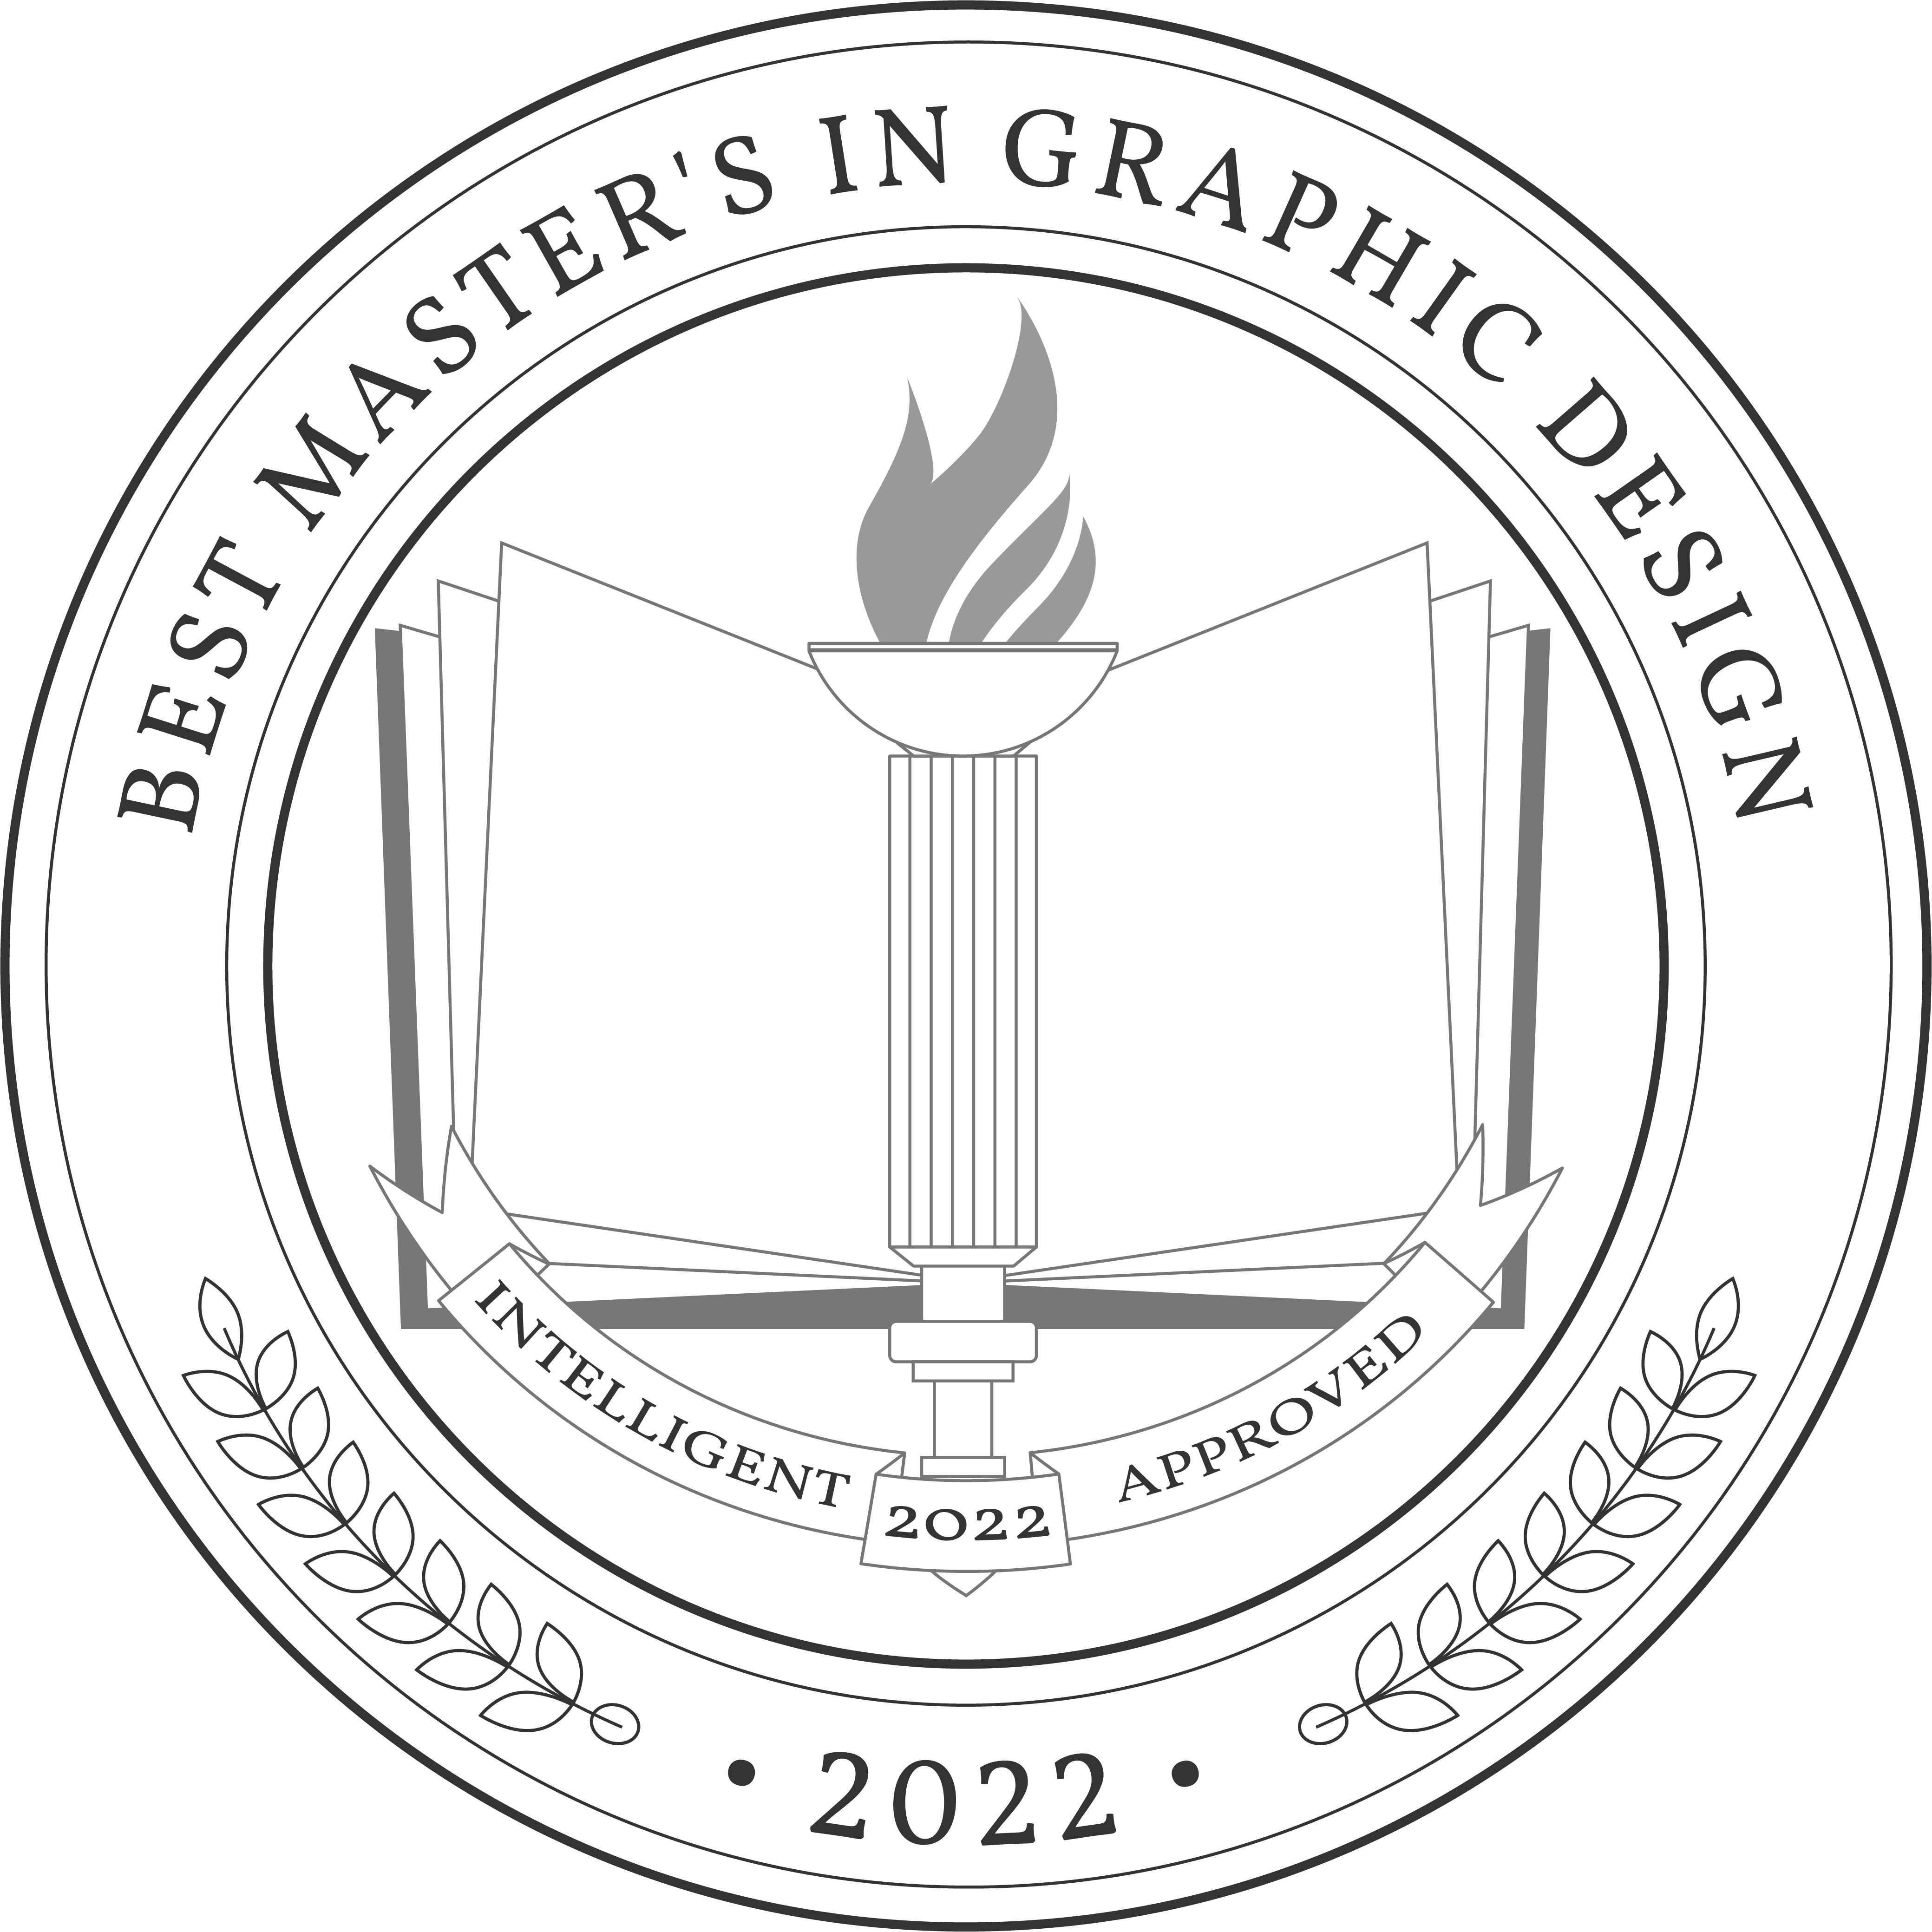 Best Master's in Graphic Design Degree Programs